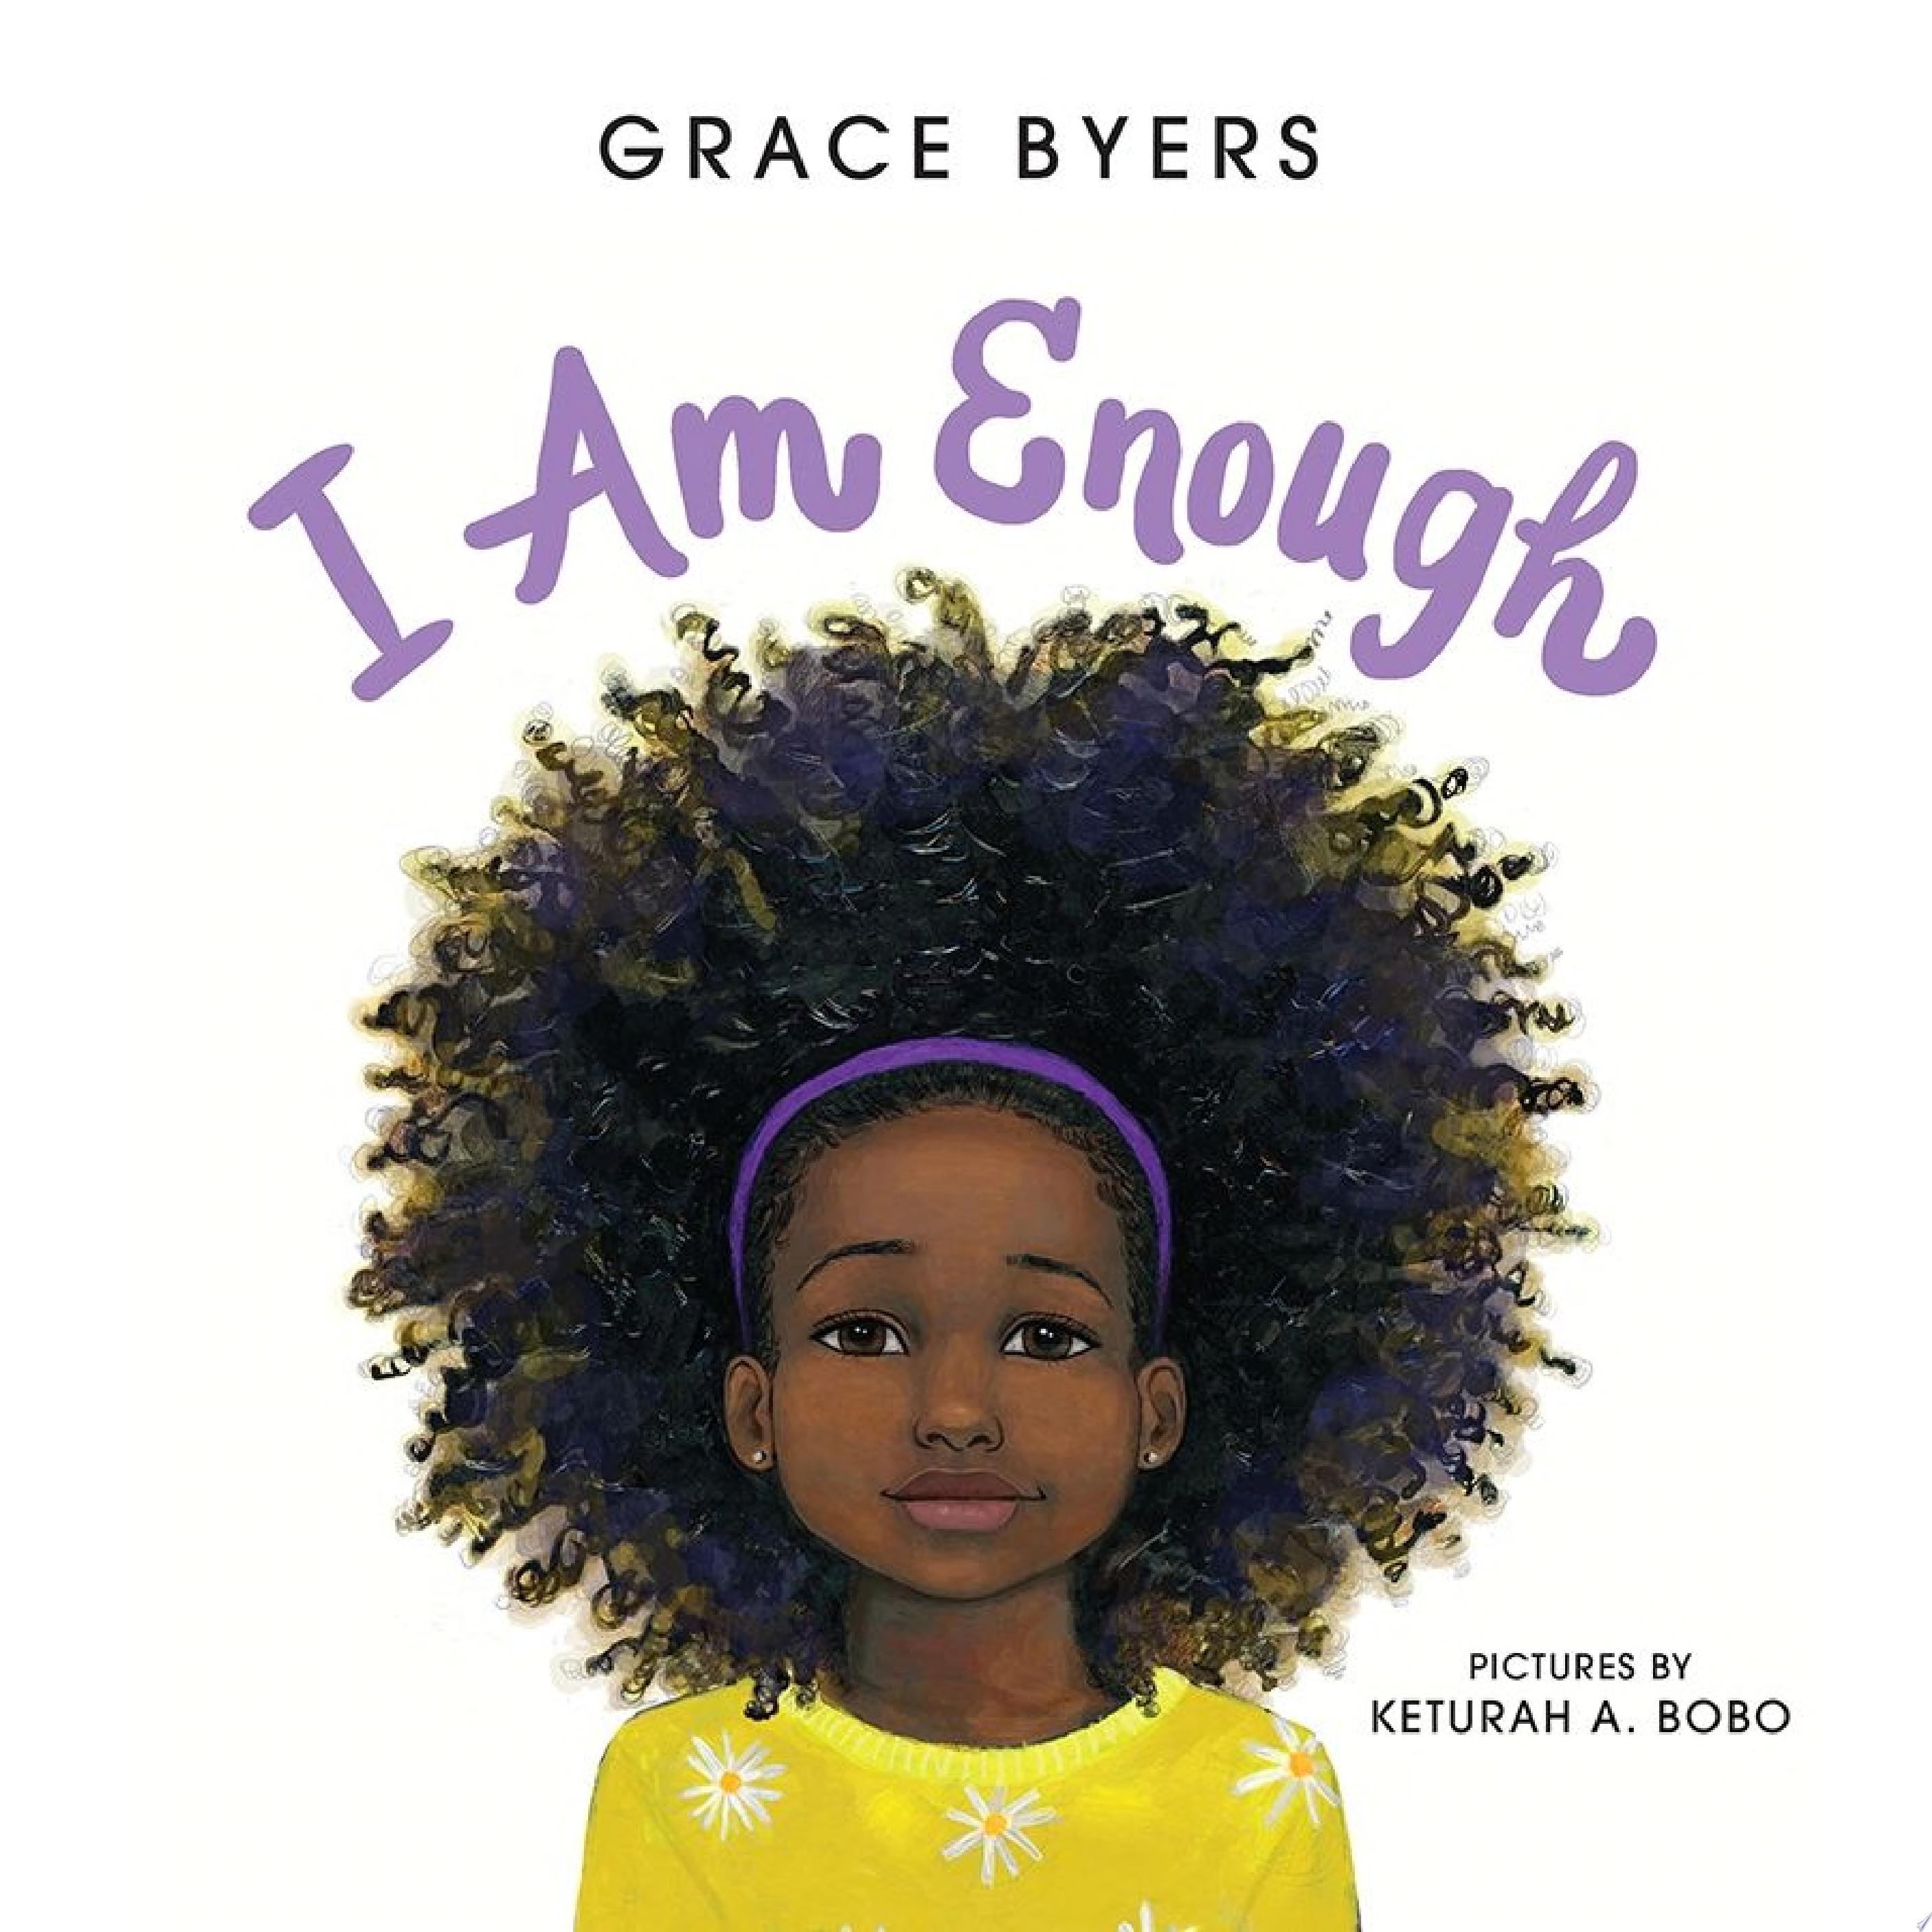 Image for "I Am Enough"